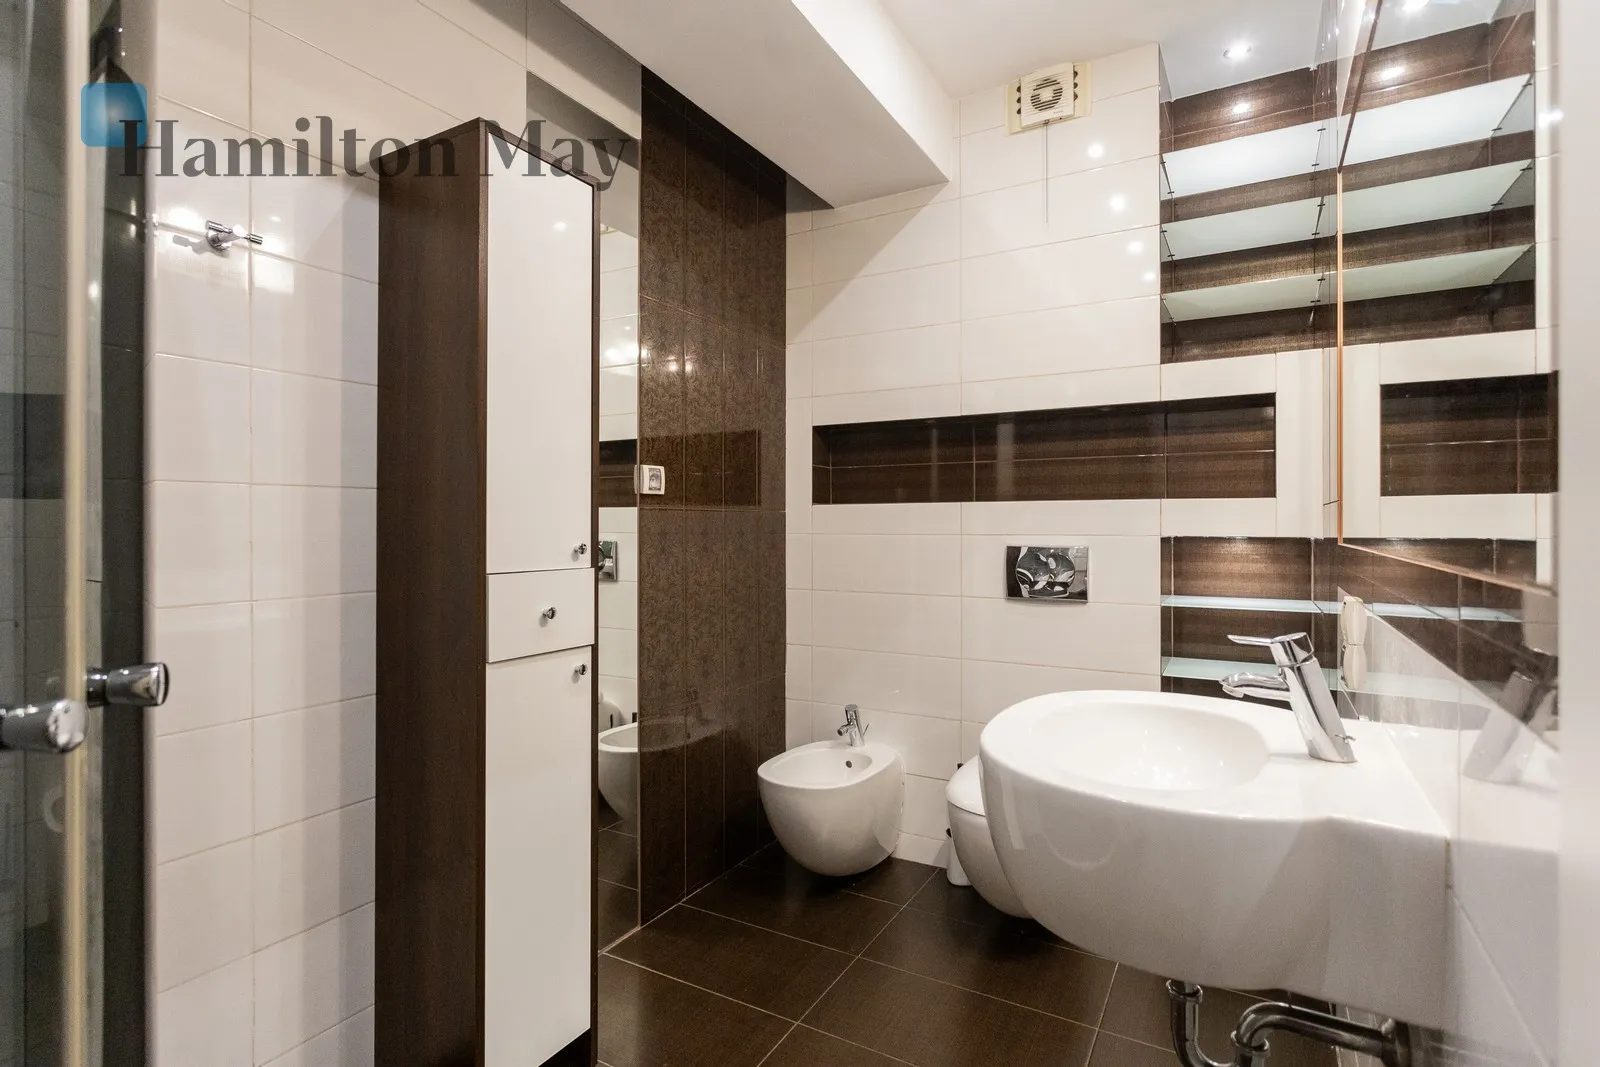 Distance to centre: 2.81 km Level: 5 Price: 924000 PLN Bedrooms: 2 Bathrooms: 1 Size: 66m2 Price/m2: 14000 PLN